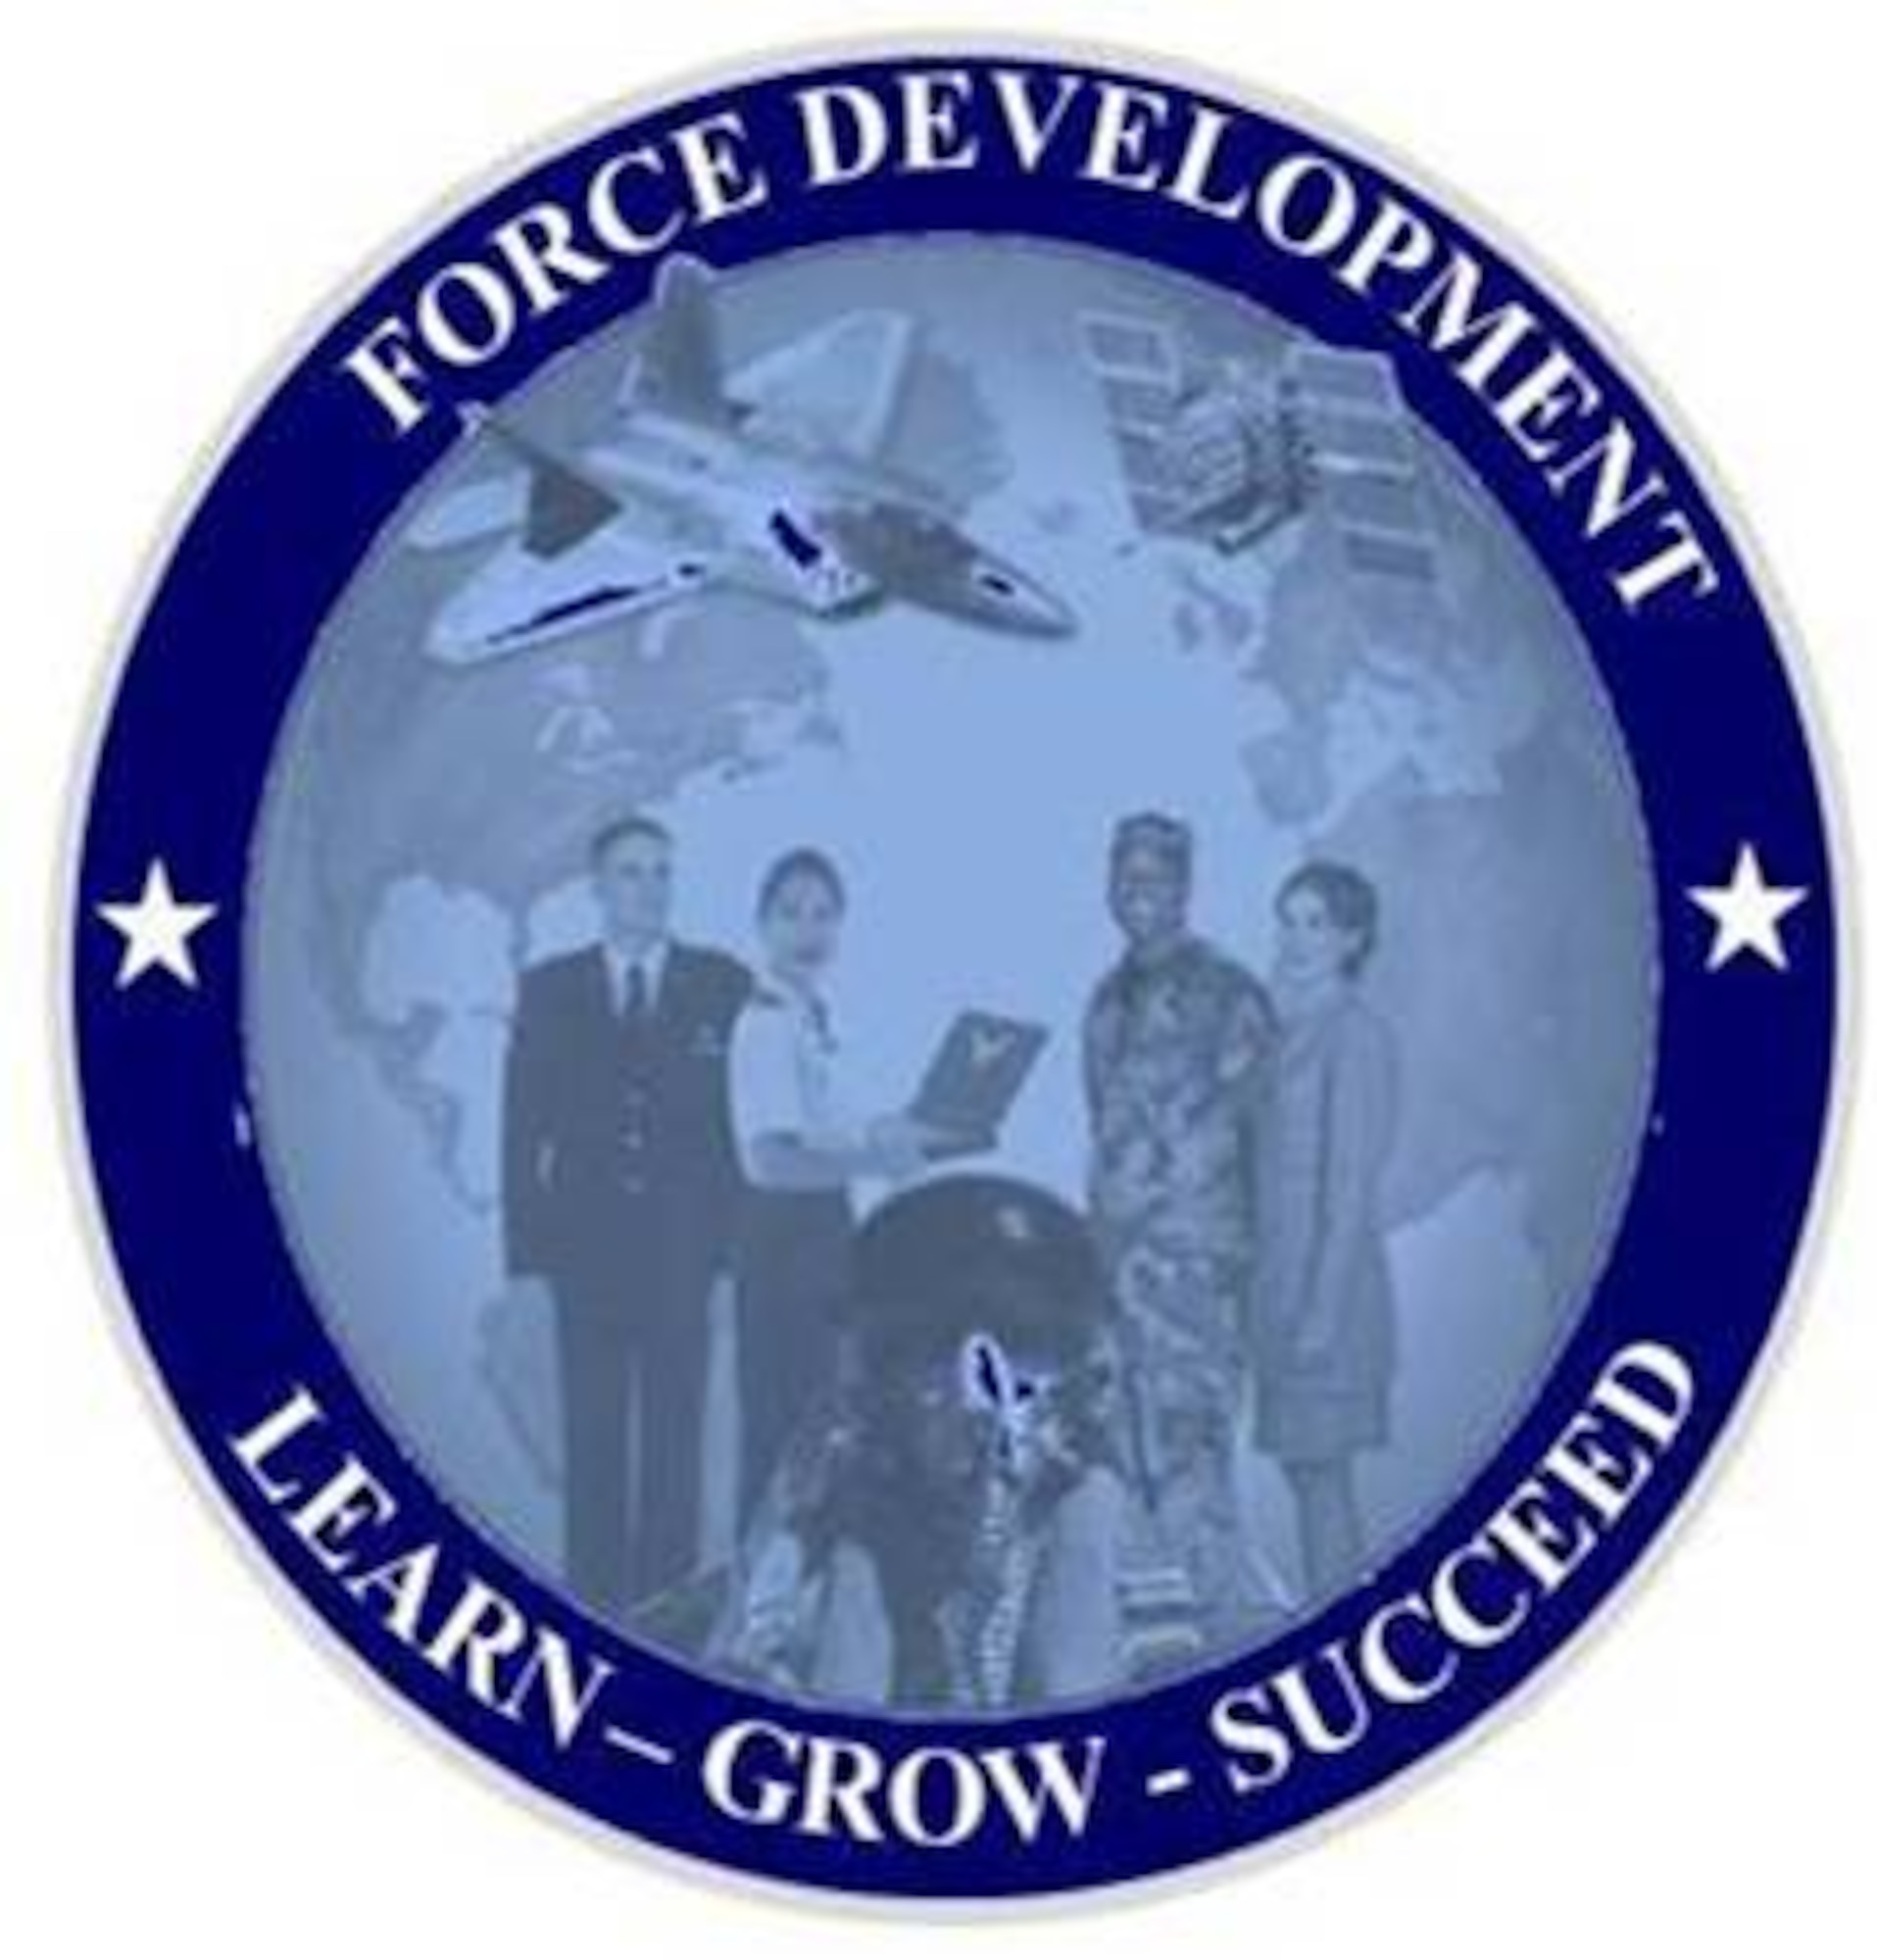 Force development logo